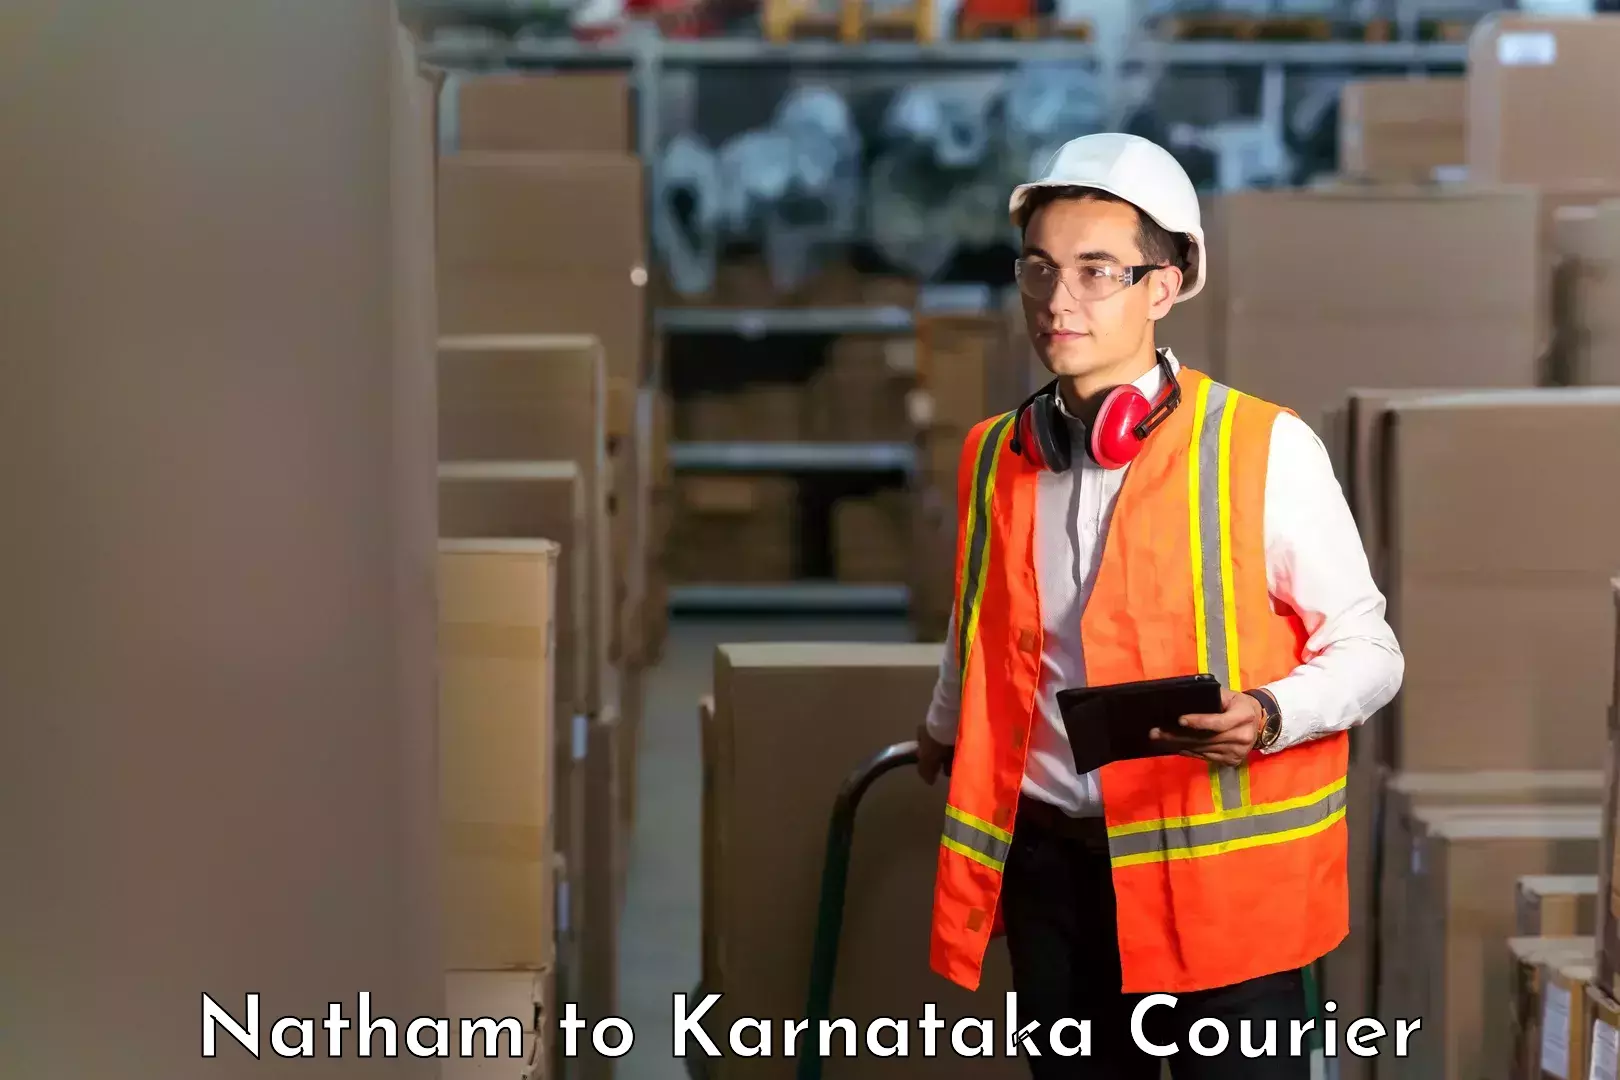 Courier service innovation Natham to Karnataka